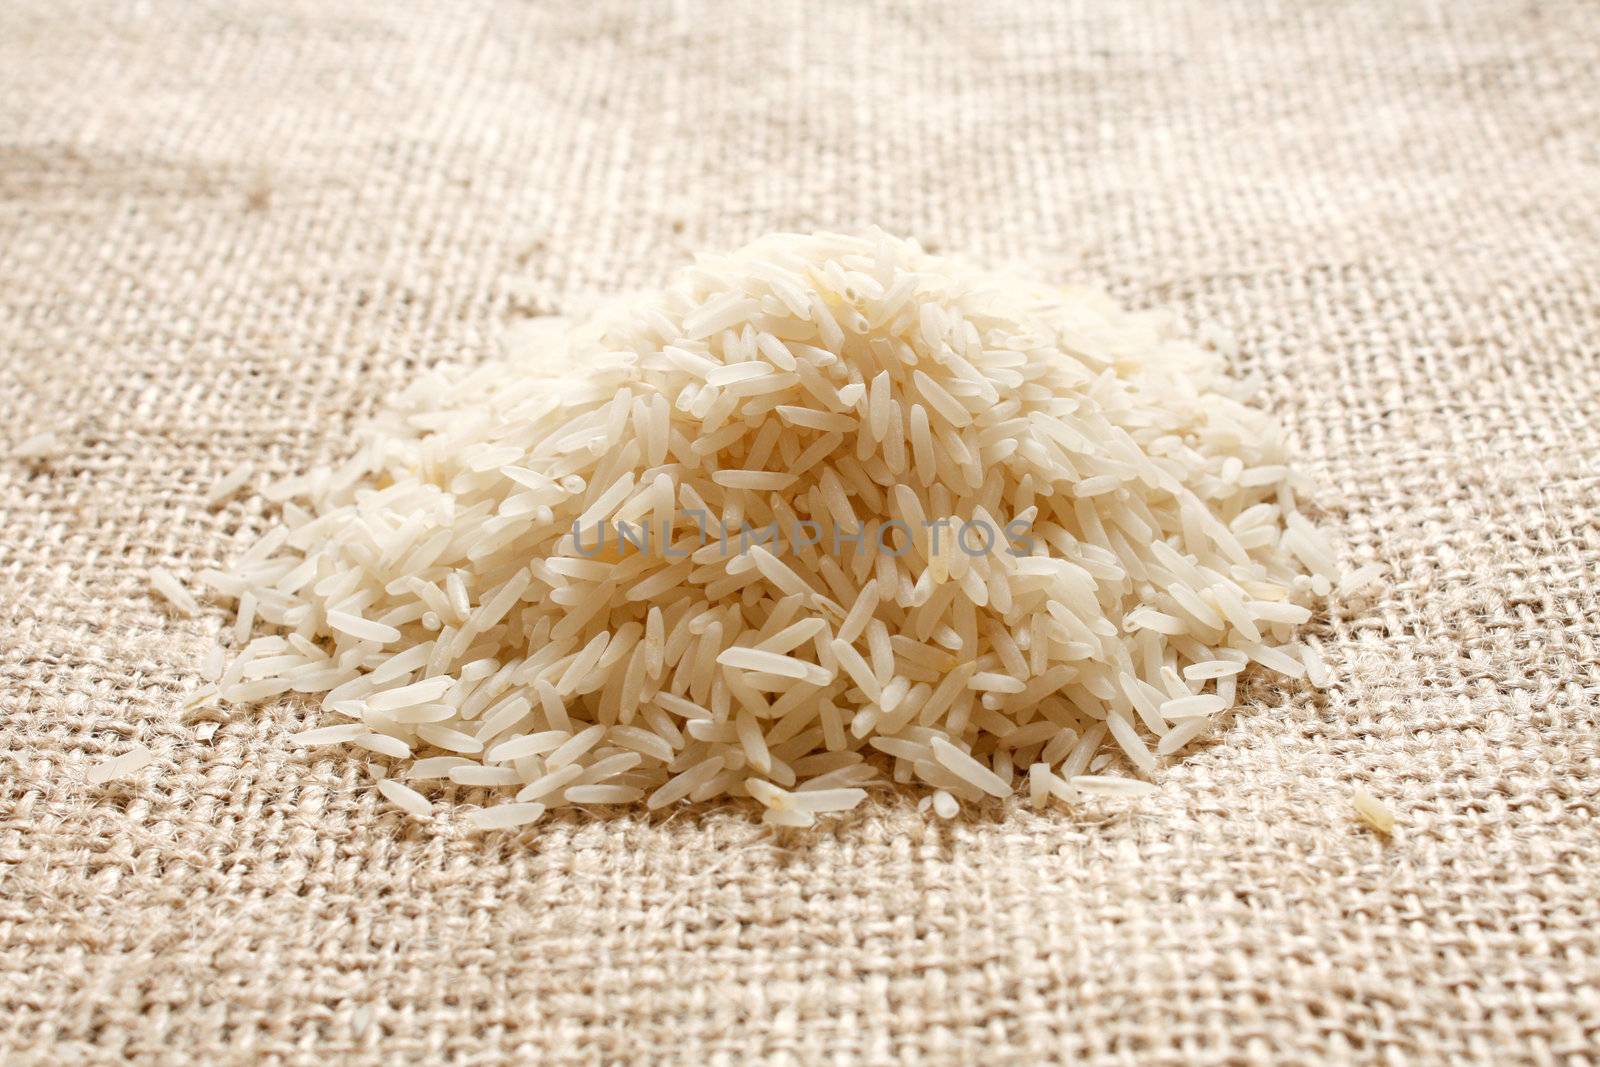 Basmati rice in a heap